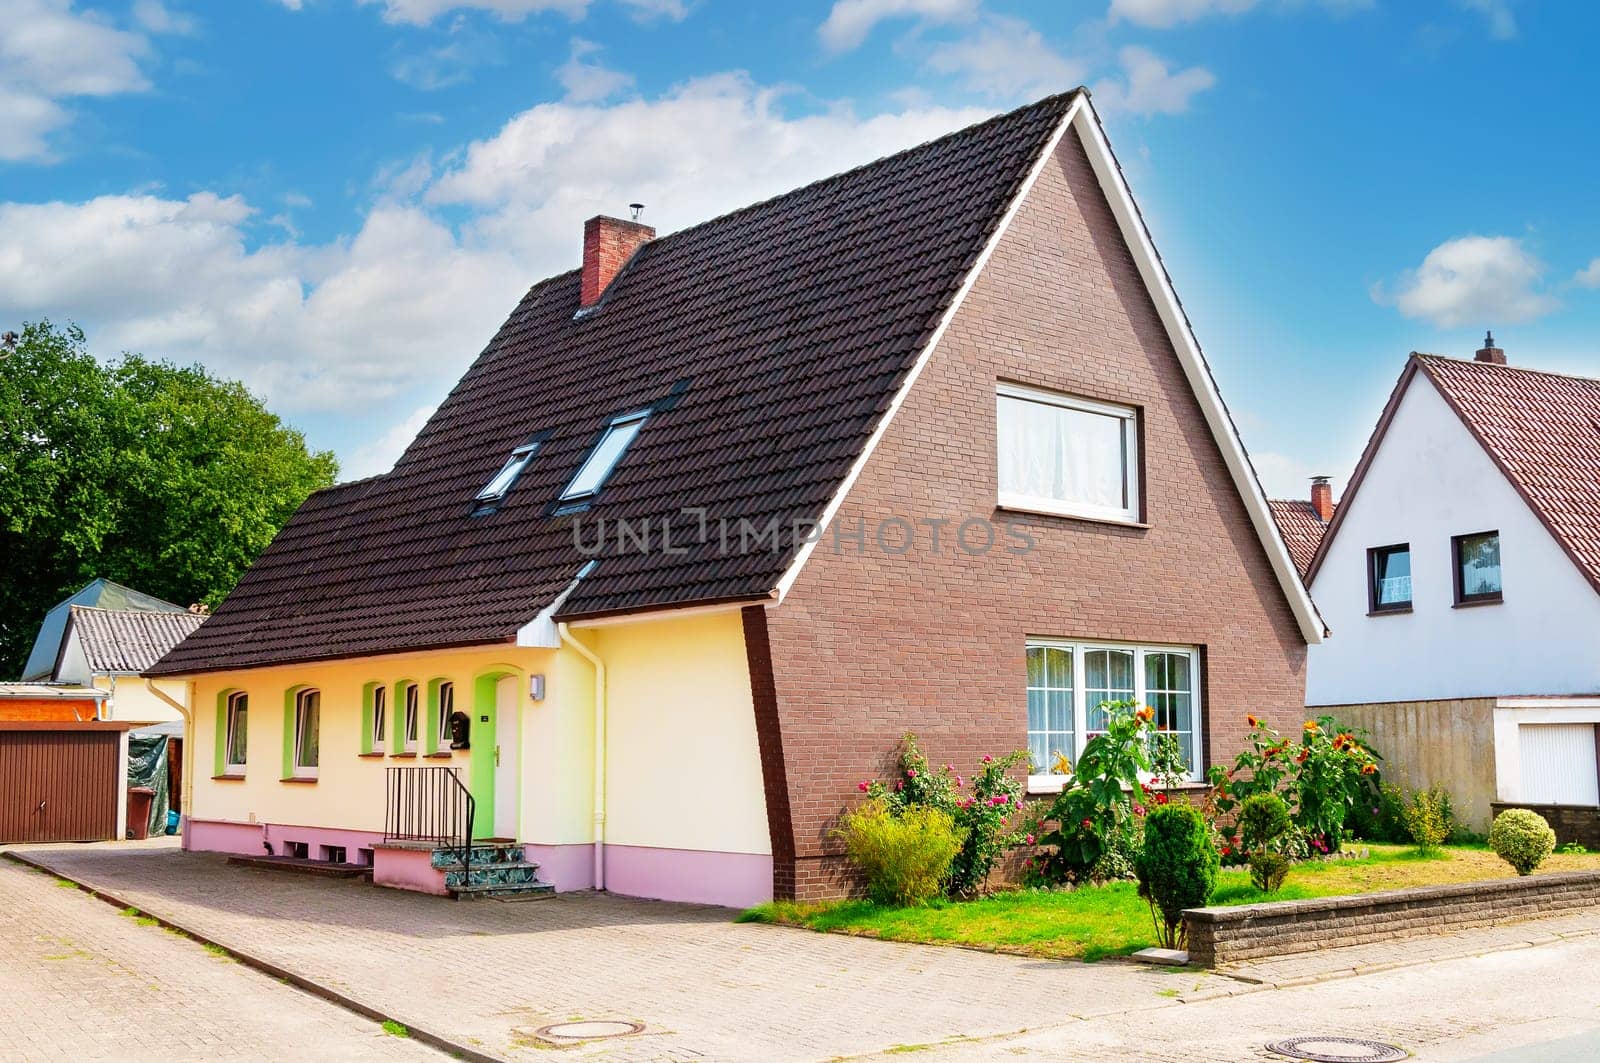 Cozy german house. Street in Germany.